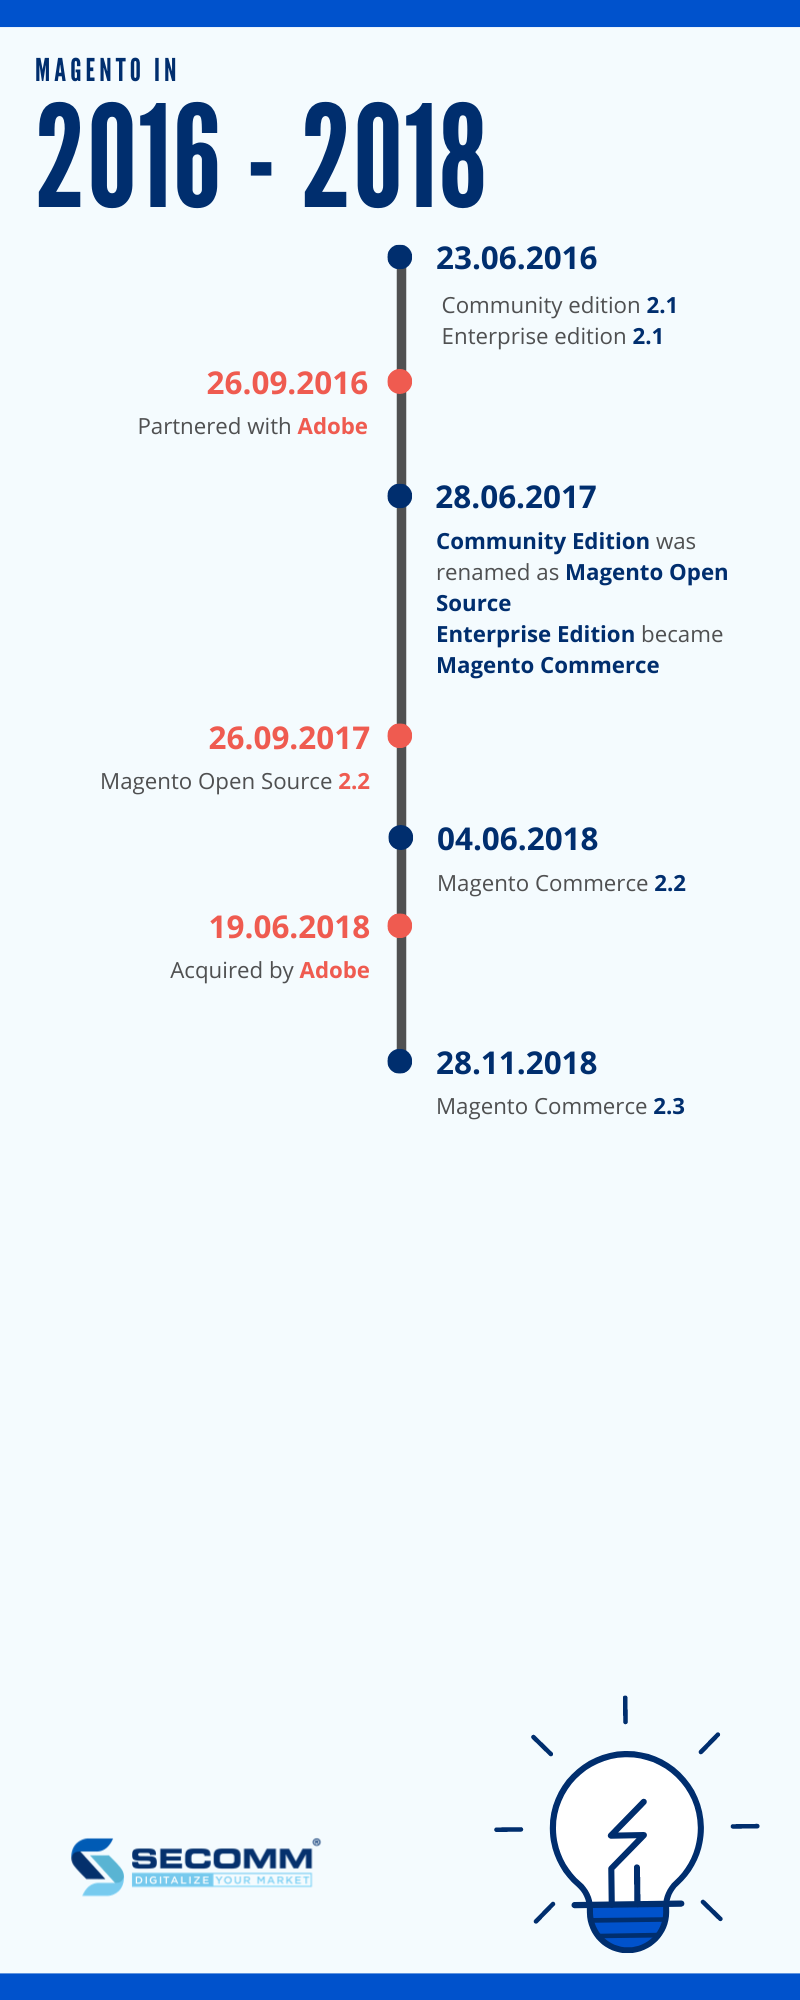 Magento timeline 2016 - 2018